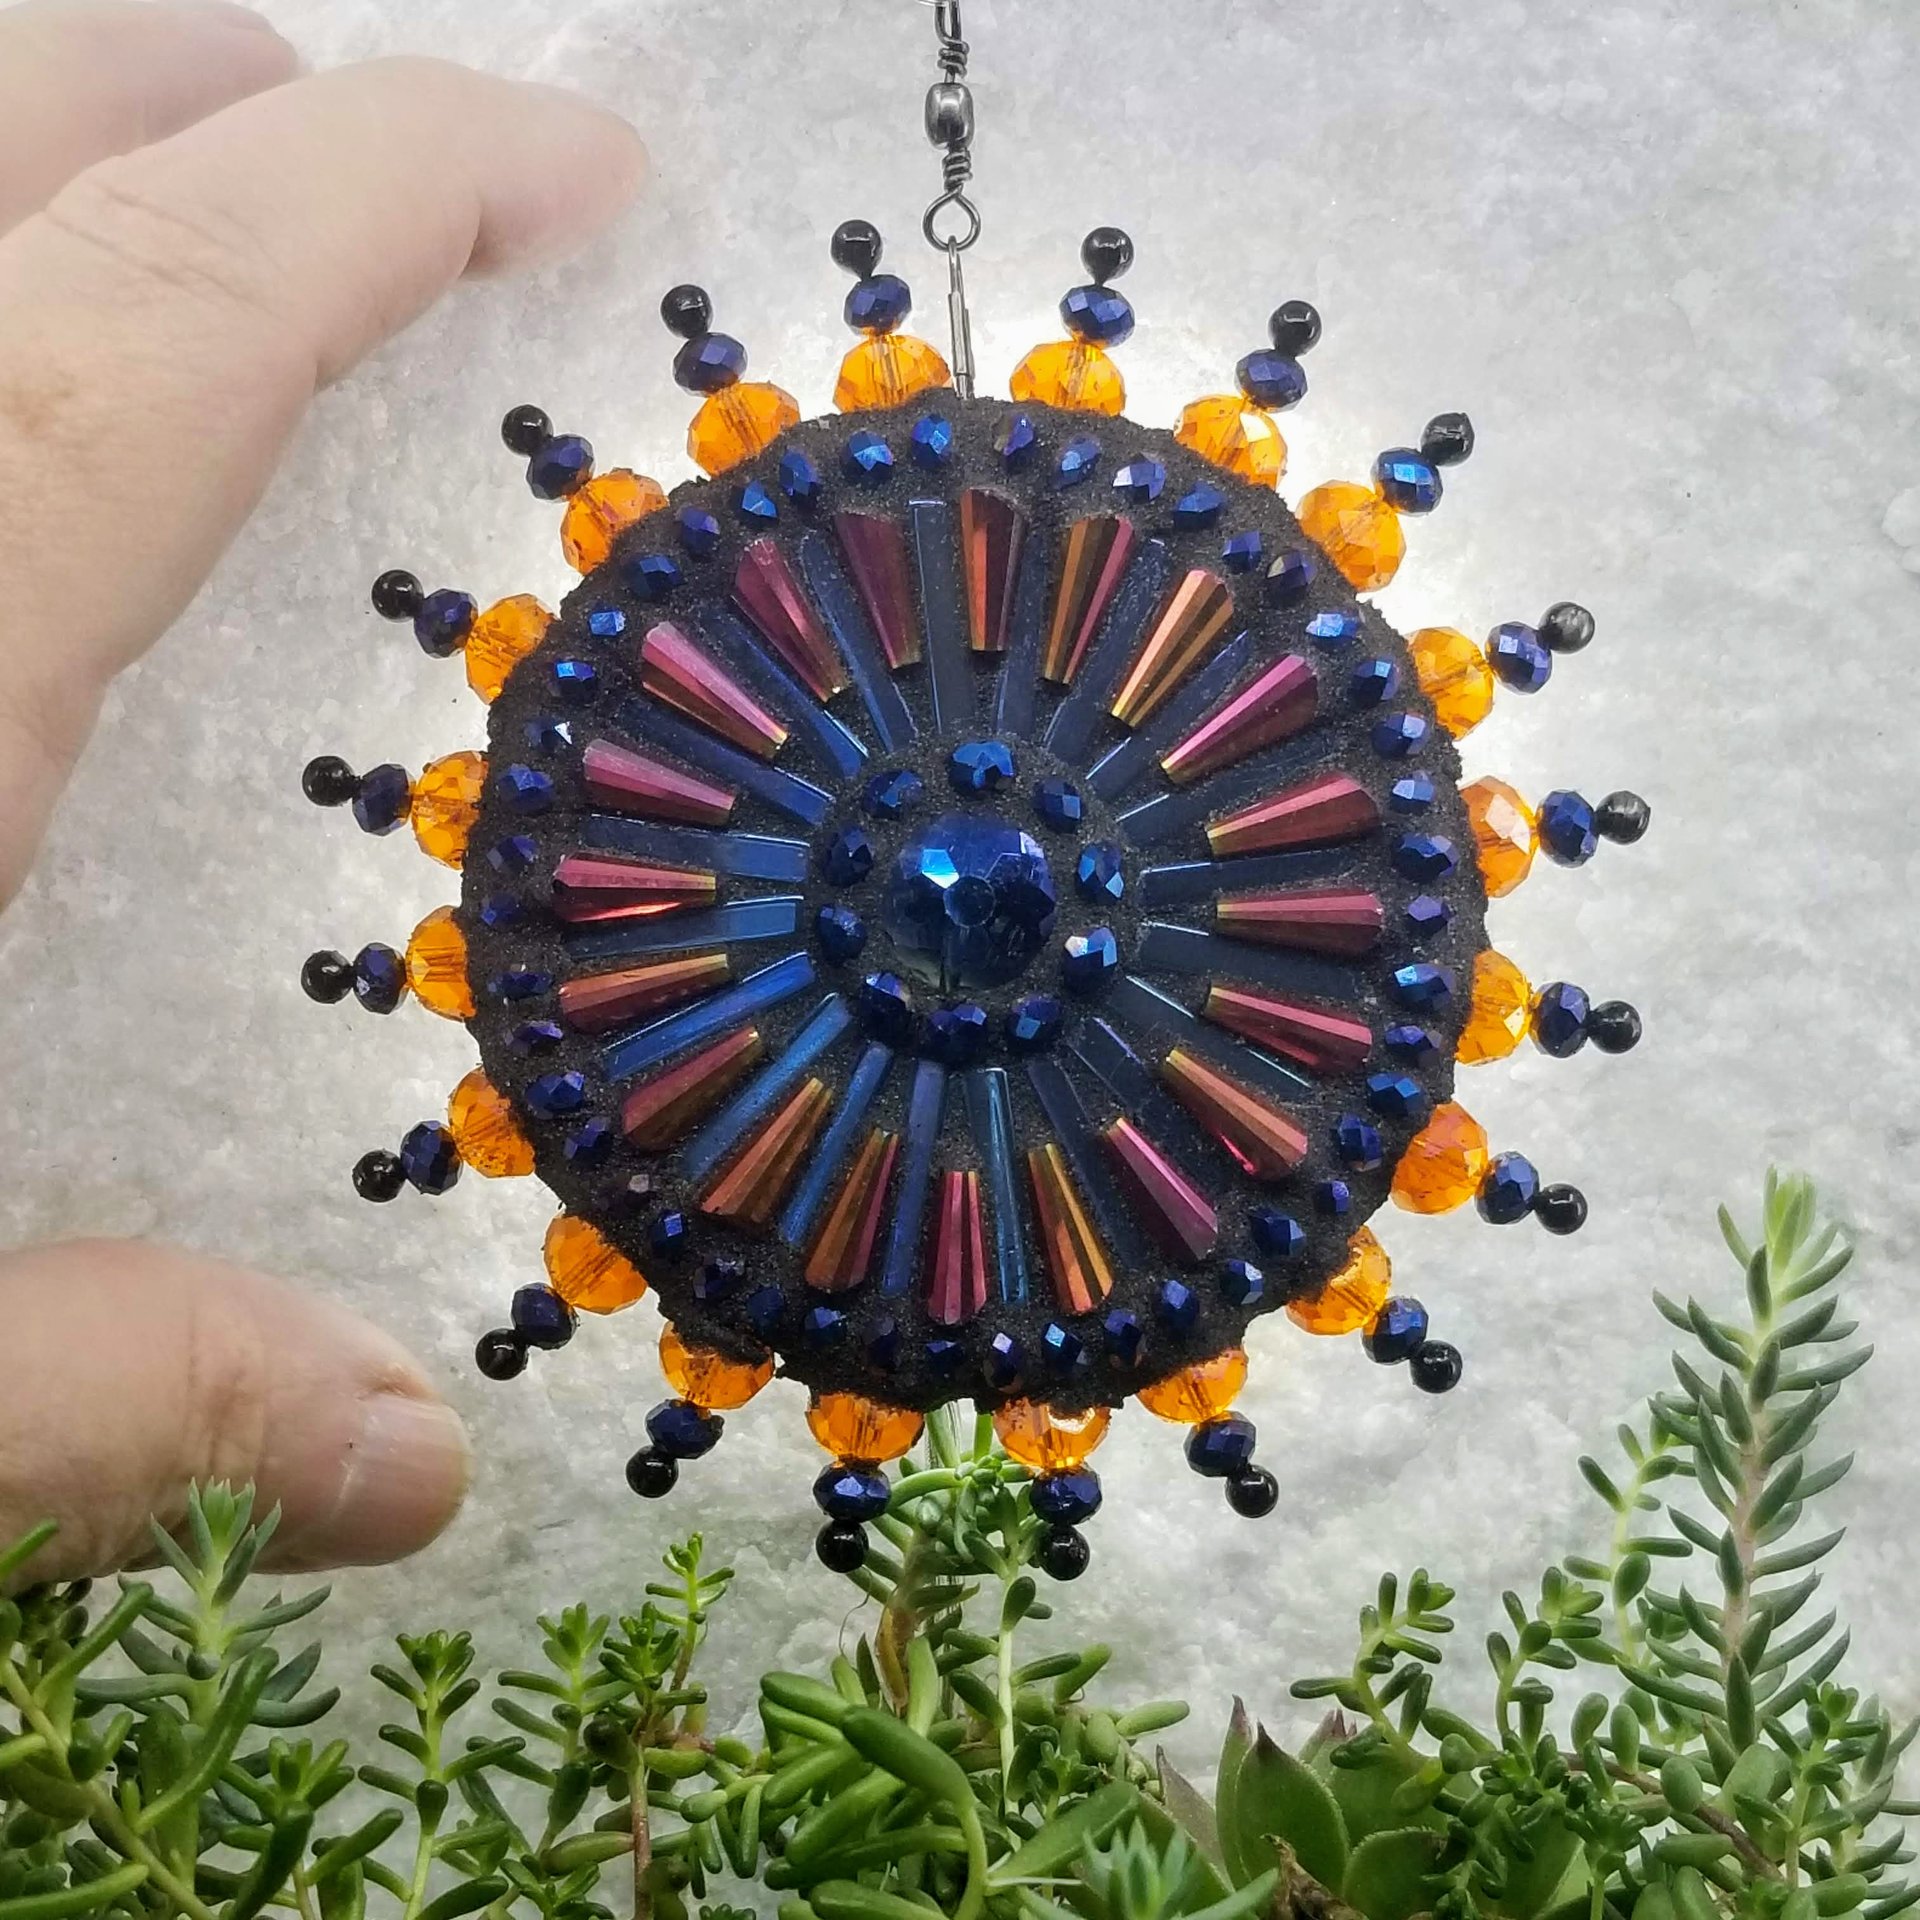 Orange and Cobalt Blue Mosaic Garden Spinner, Home Decor, Garden Decor, Gardening Gift,